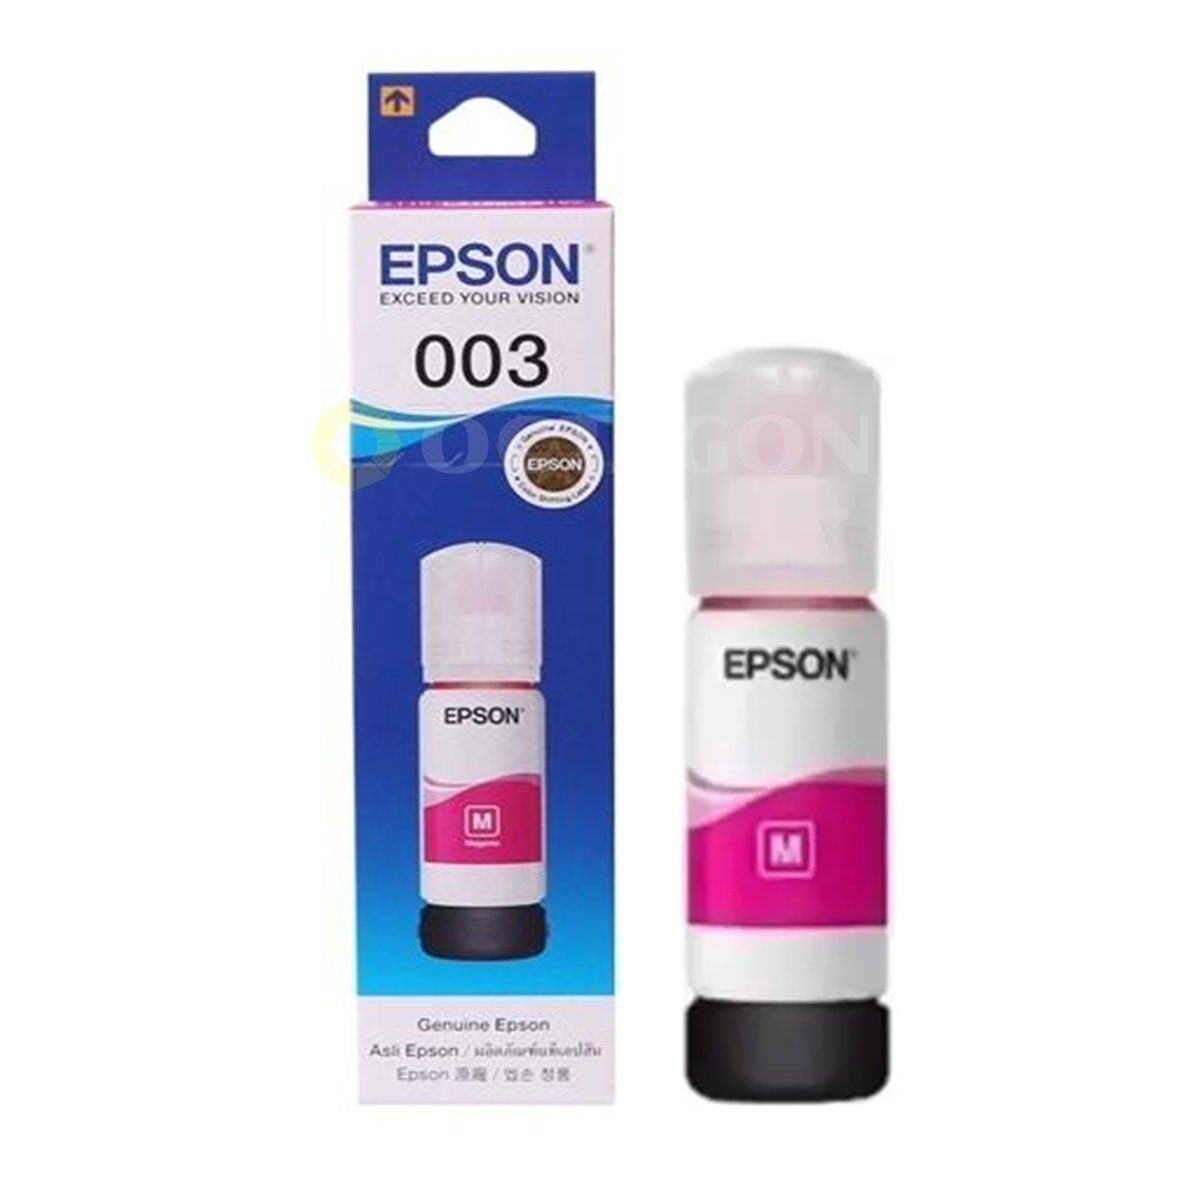 Epson 003 Original Ink Bottle C13t00v For Epson L1110 L3100 L3101 L3106 L3110 L3116 4998